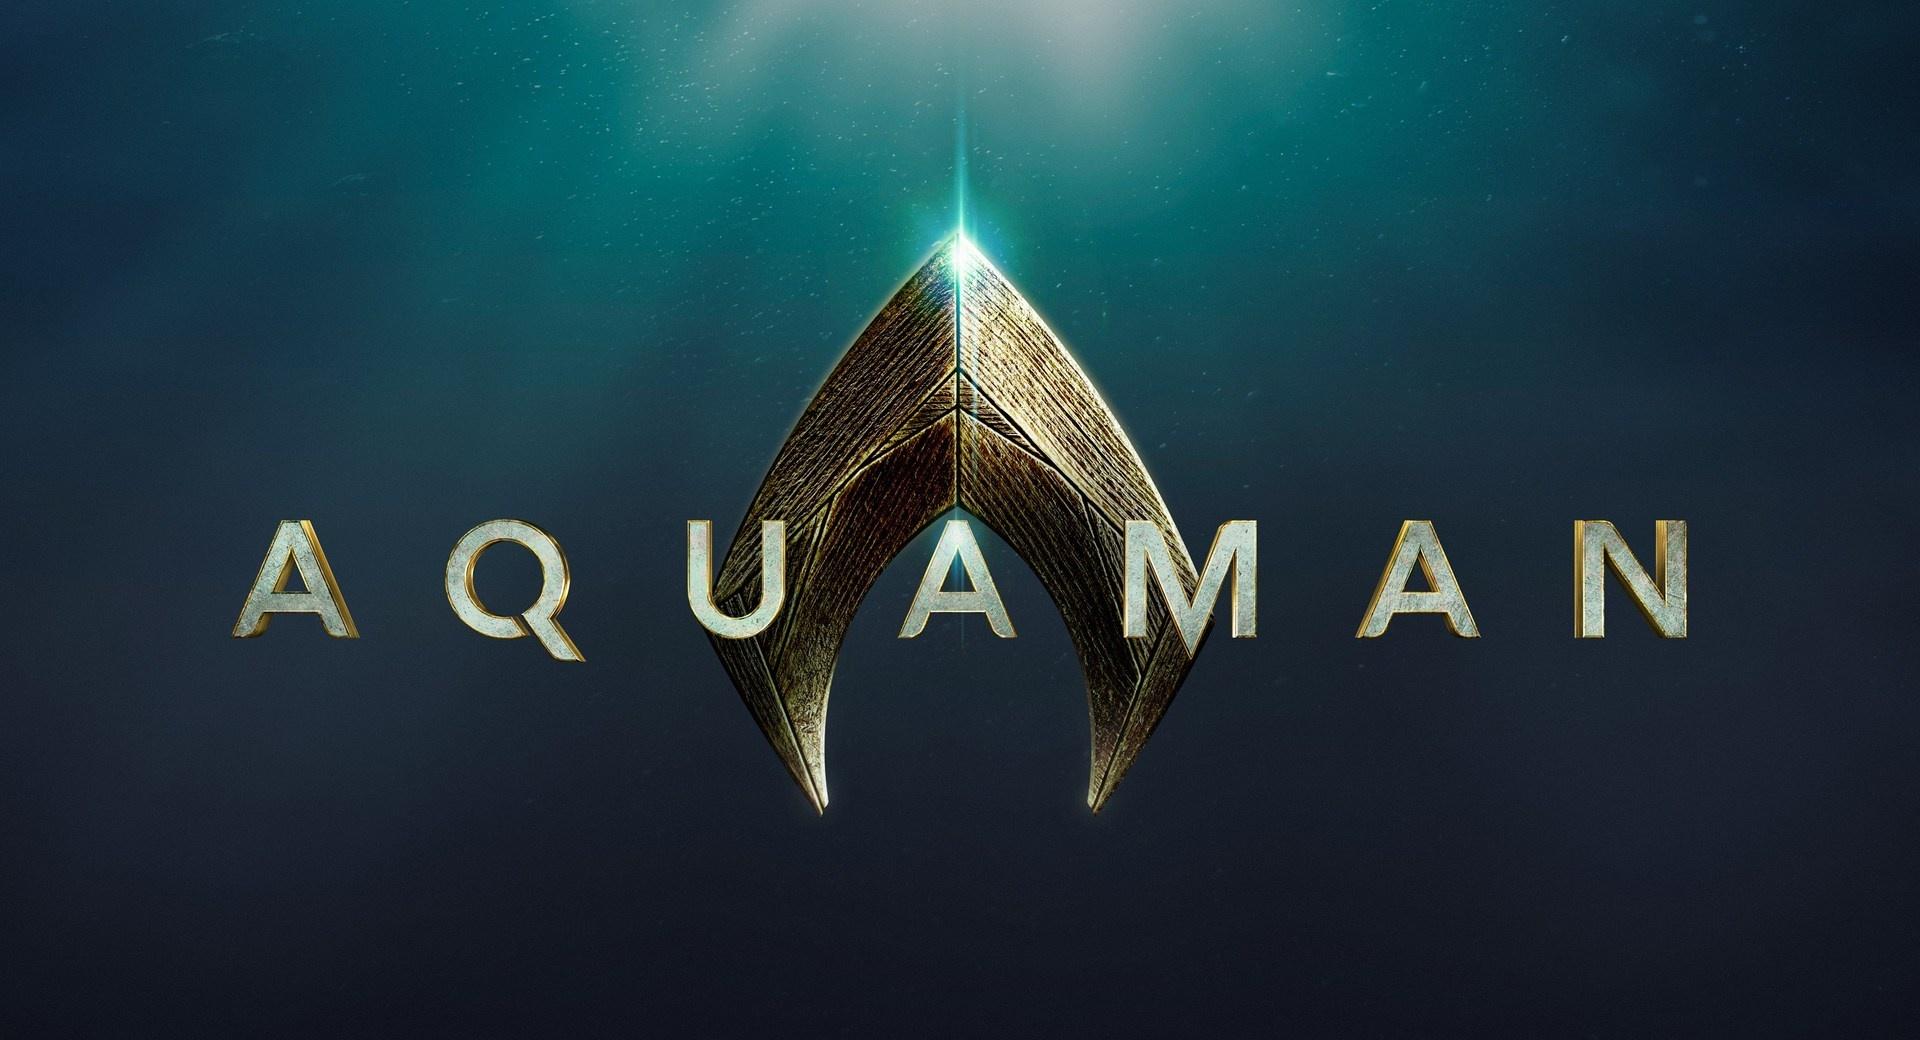 2018 Aquaman Movie Logo at 2048 x 2048 iPad size wallpapers HD quality